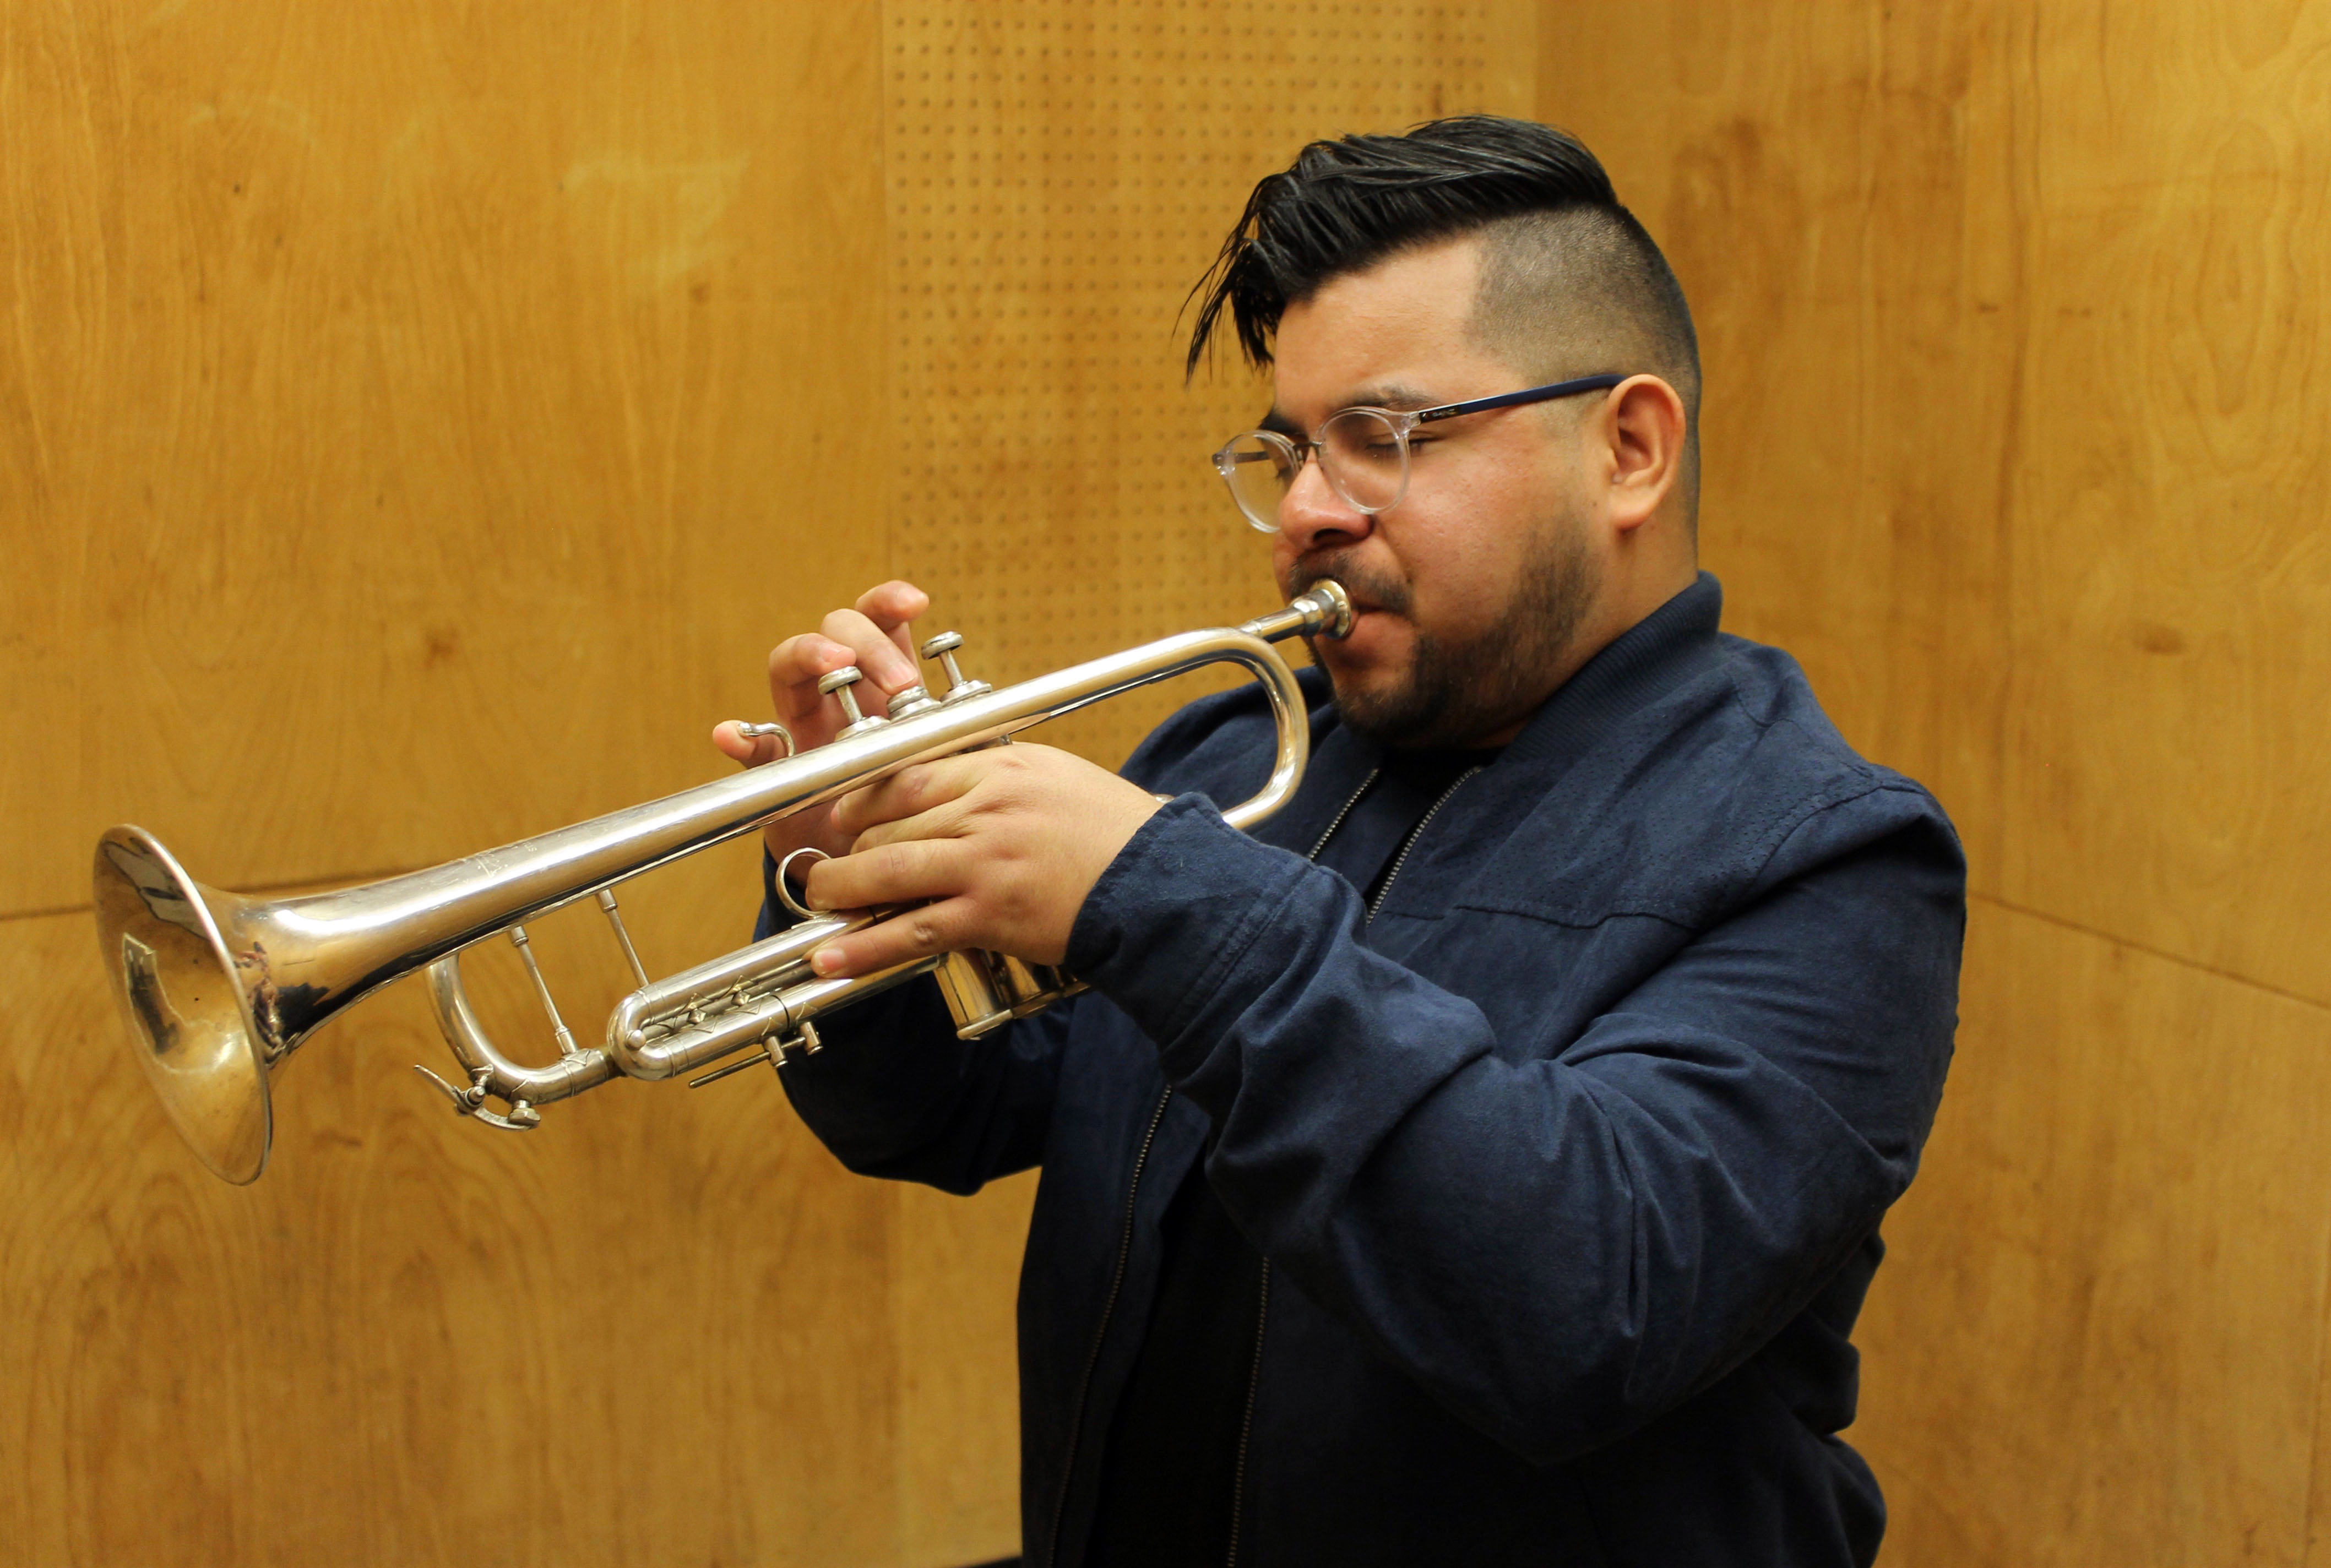 Jonathan De La Cruz practicing with his trumpet